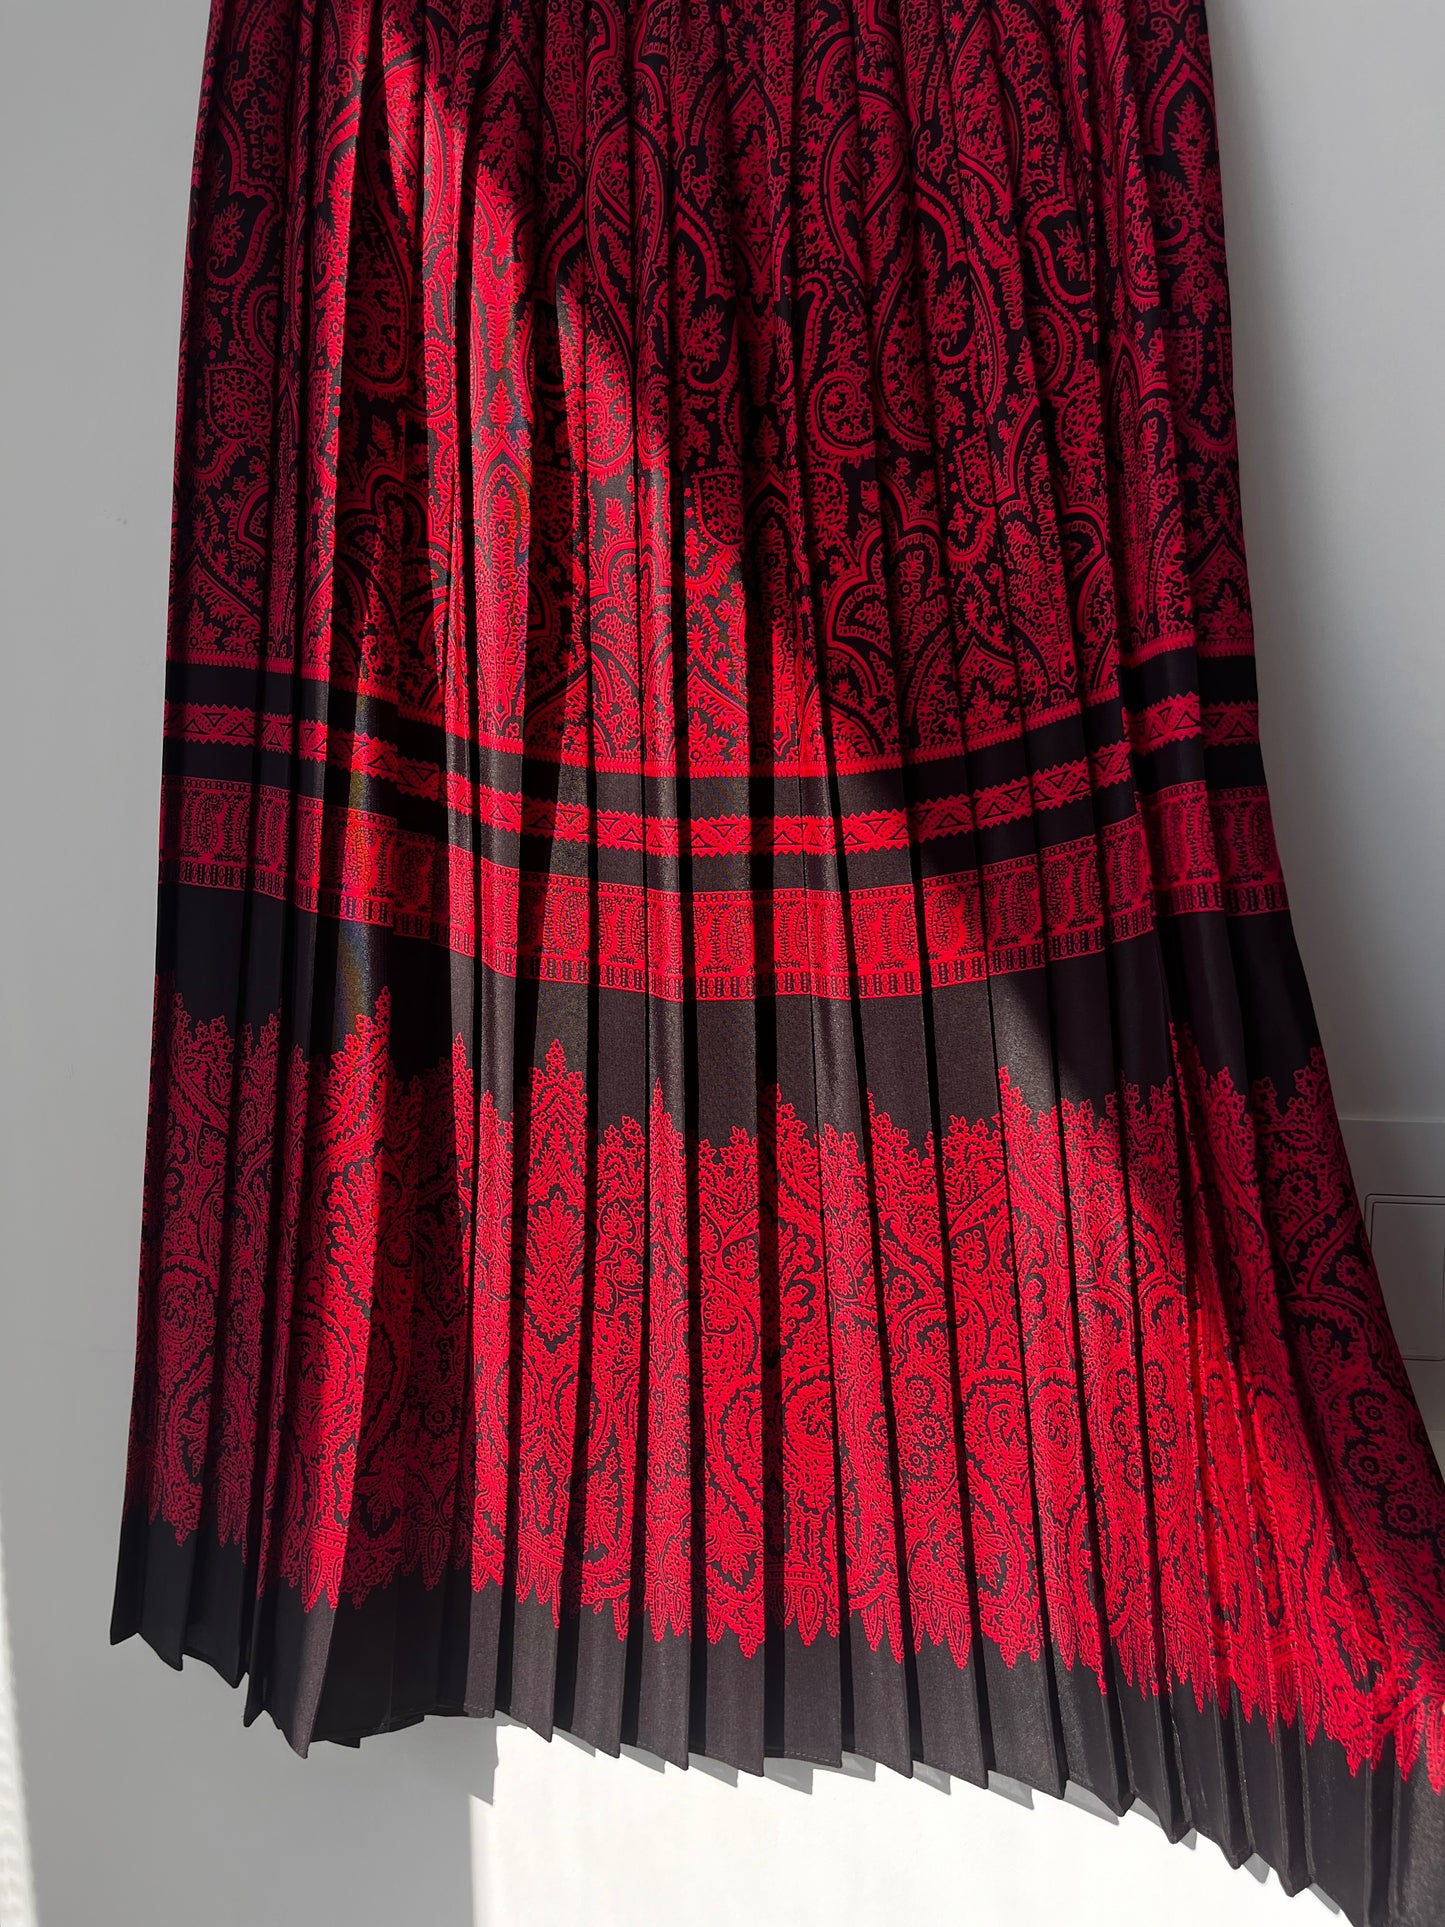 Circa 1970’s MOD Black and Red Blazer & Skirt Set